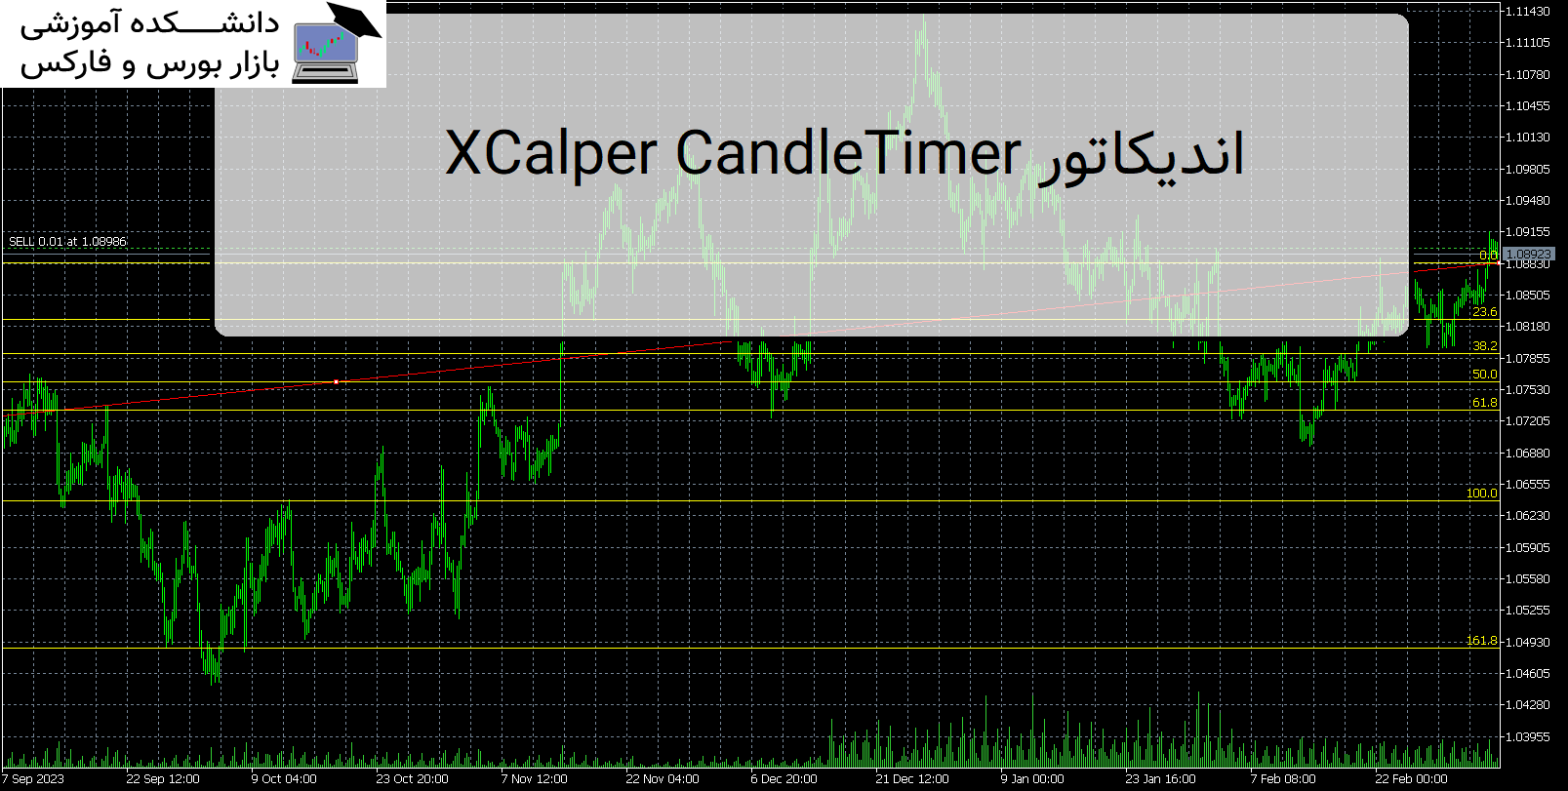 XCalper CandleTimer اندیکاتور MT5